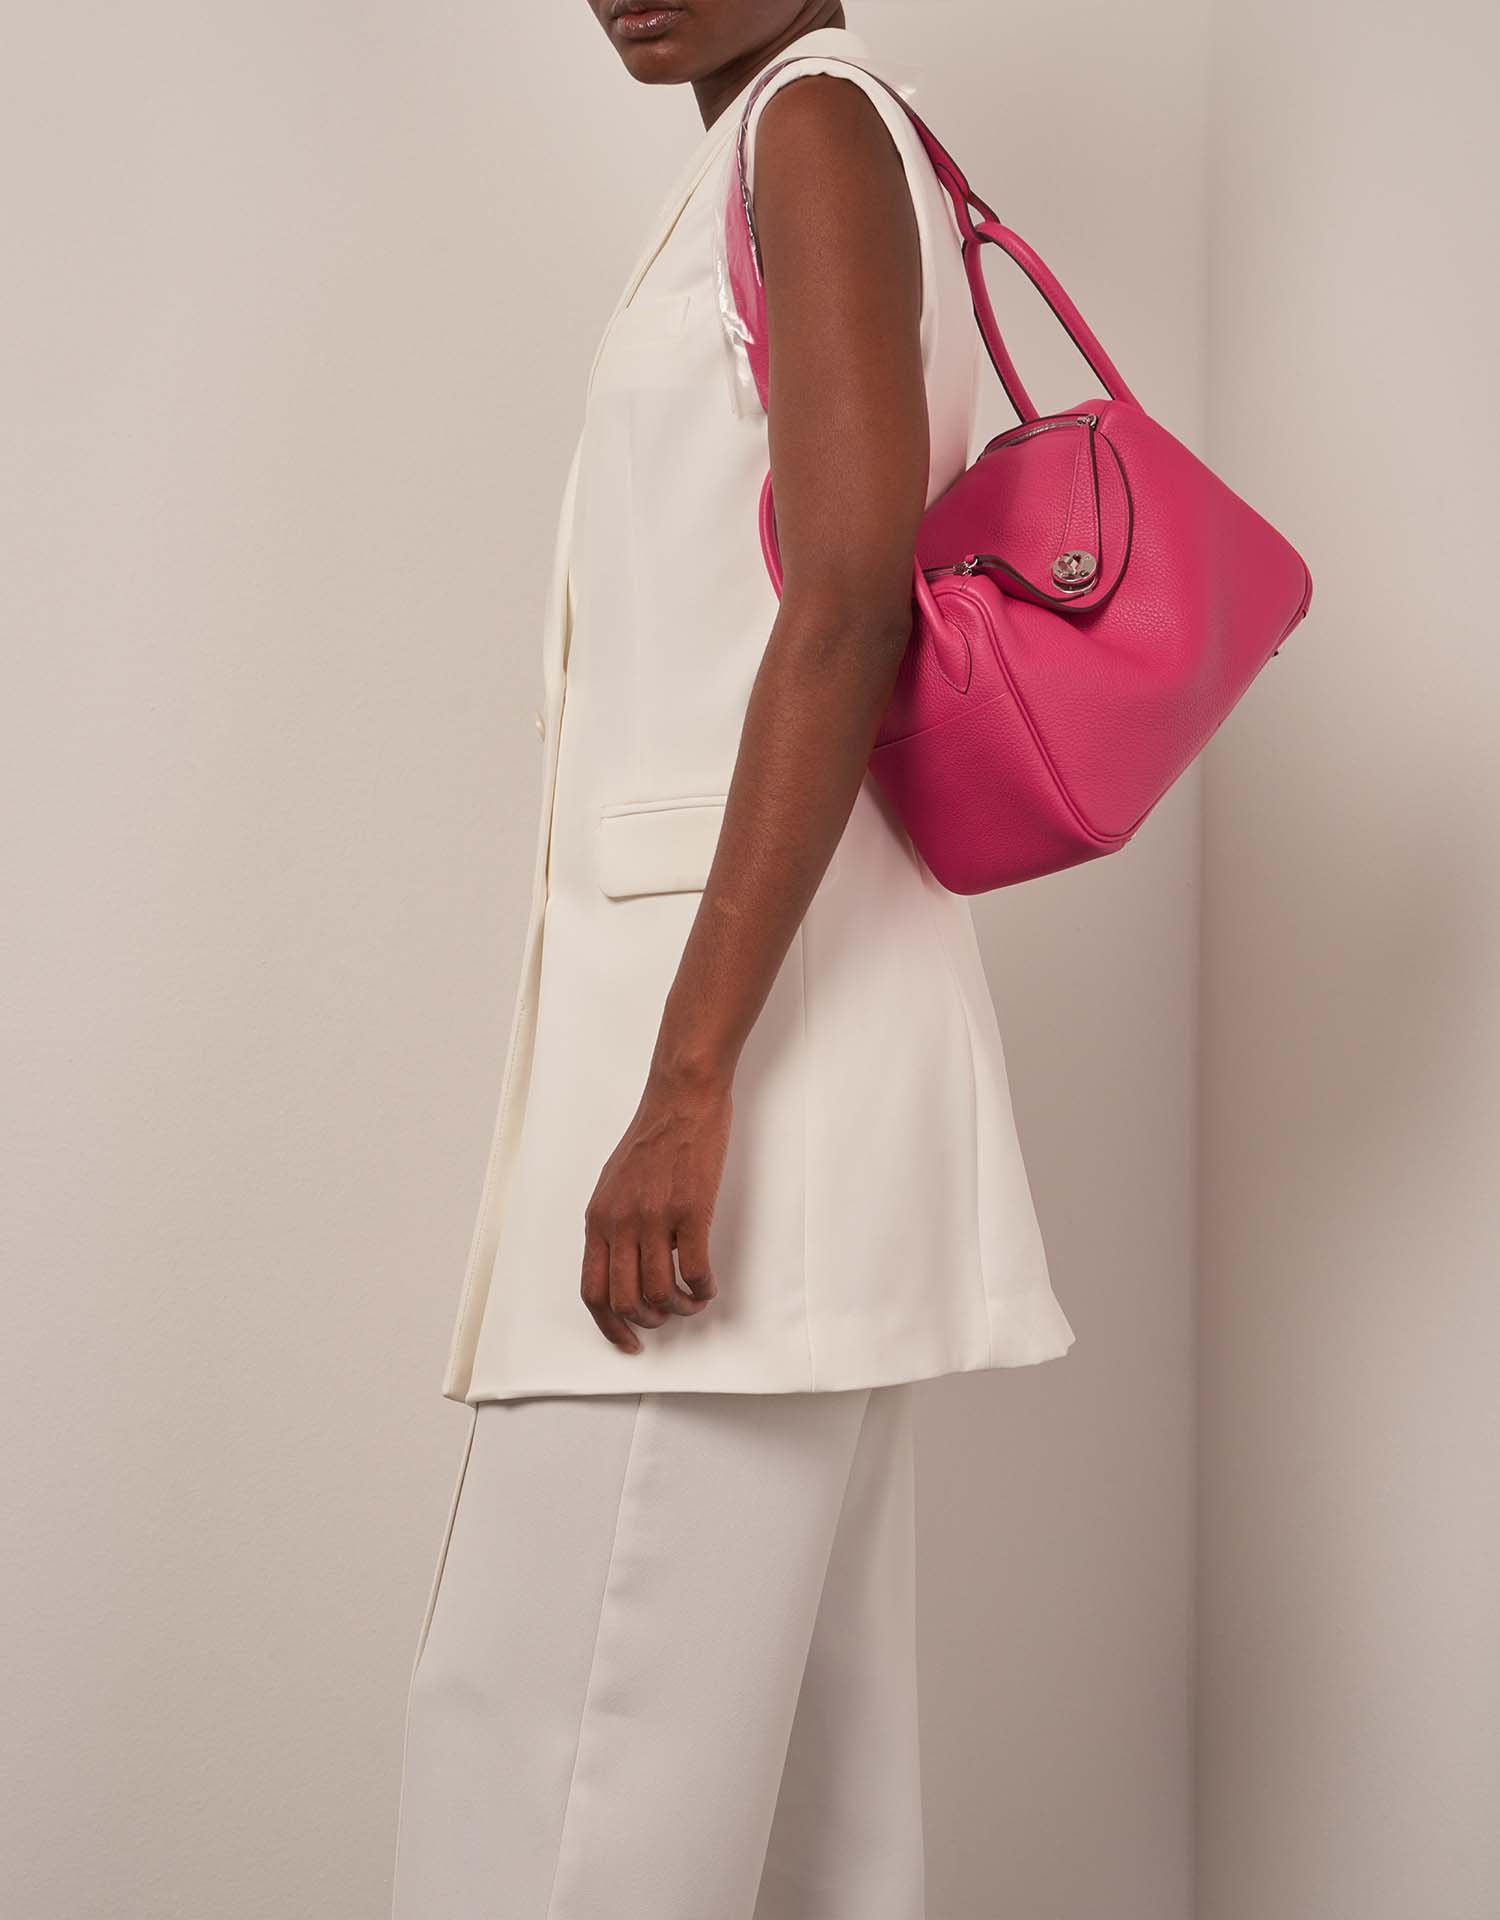 Hermès Lindy 26 RoseExtreme Sizes Worn | Sell your designer bag on Saclab.com